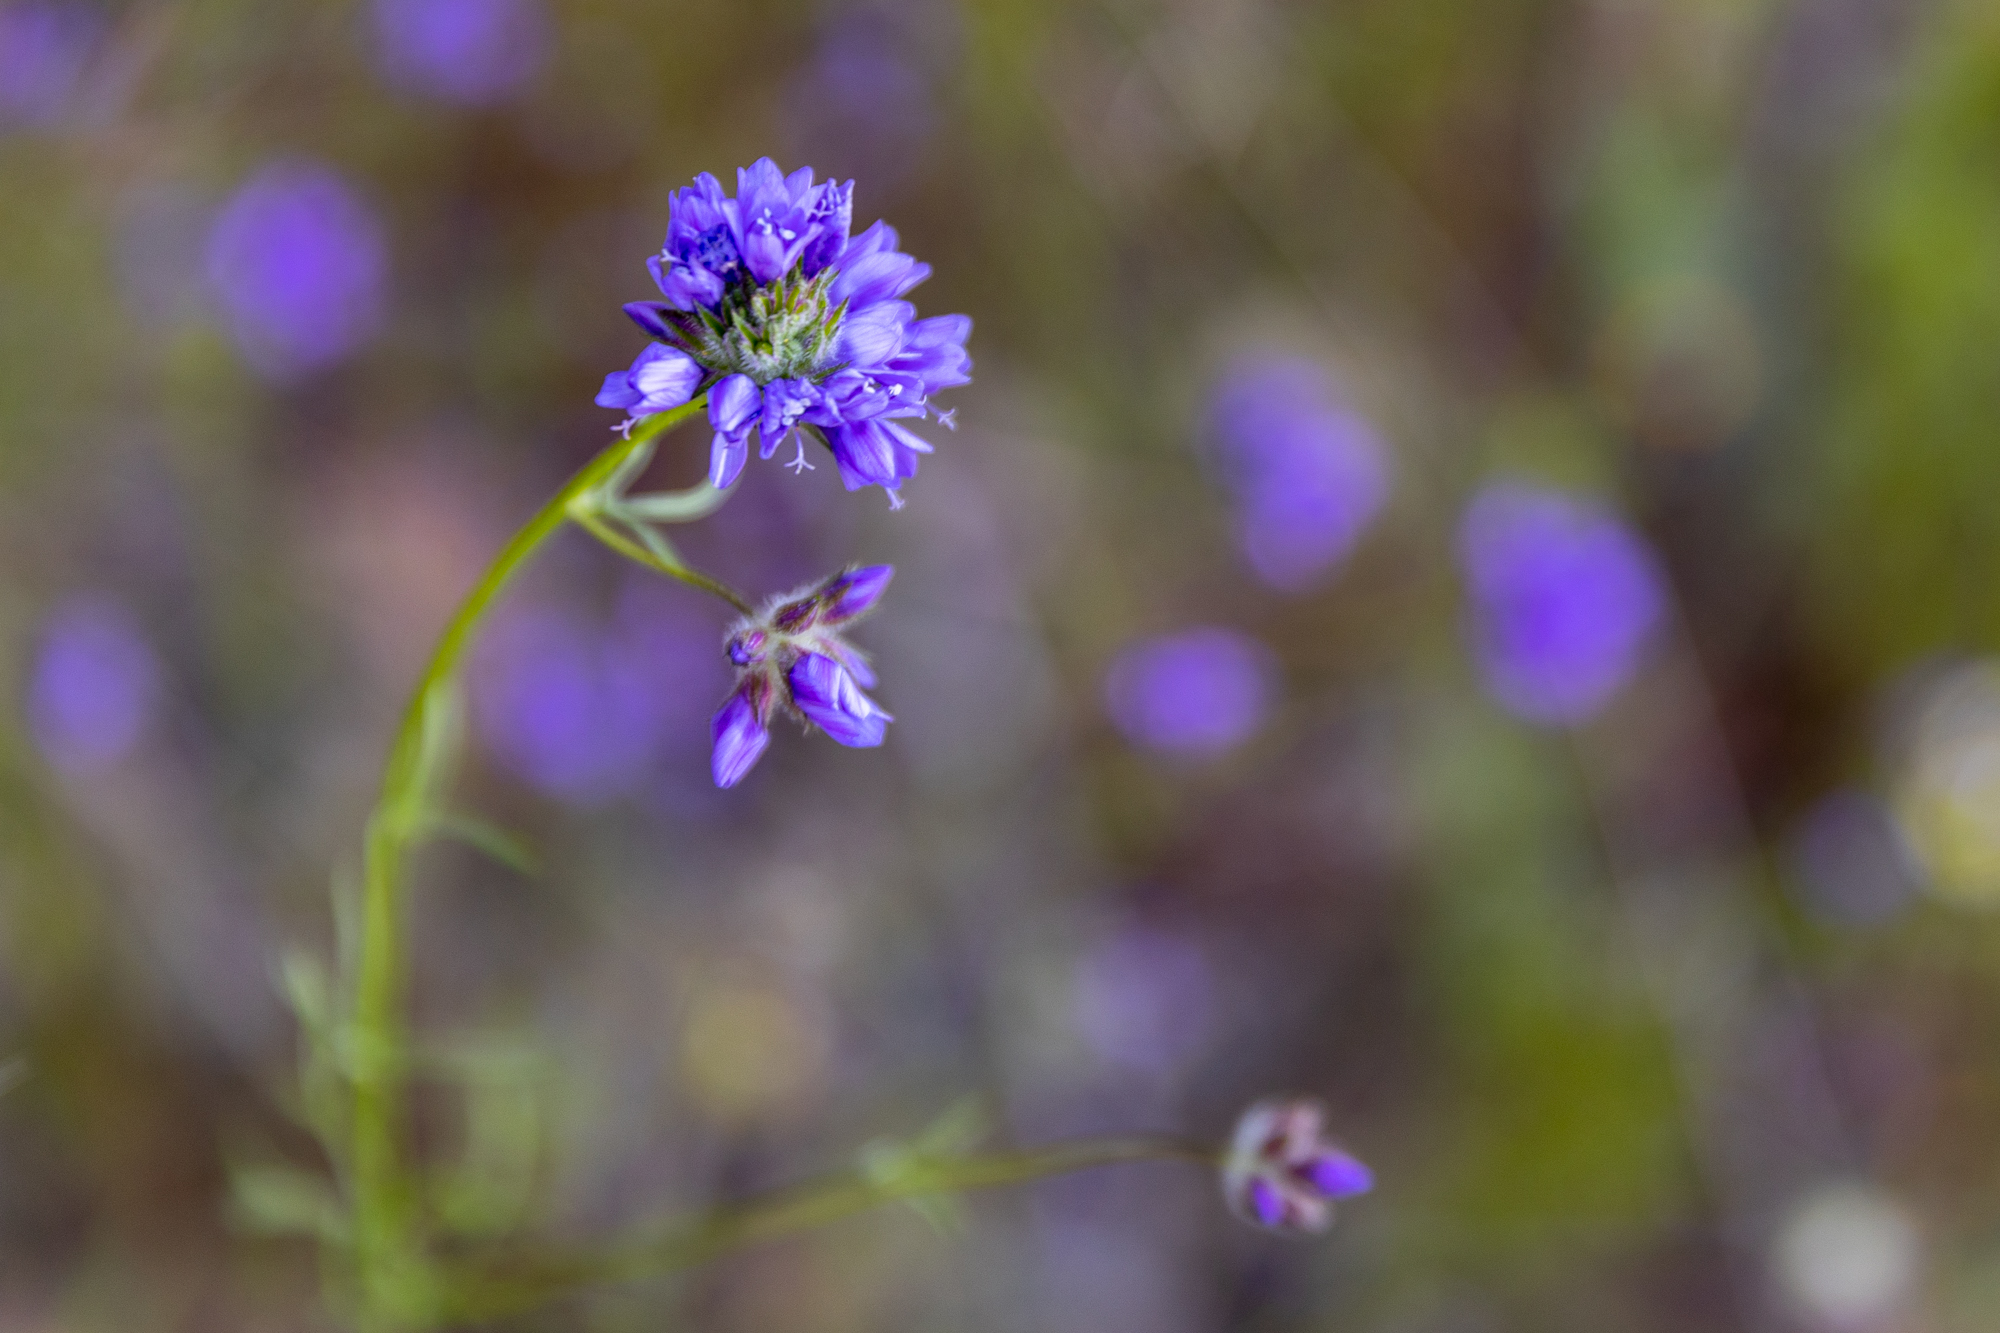 Great Basin Wildflower Mix